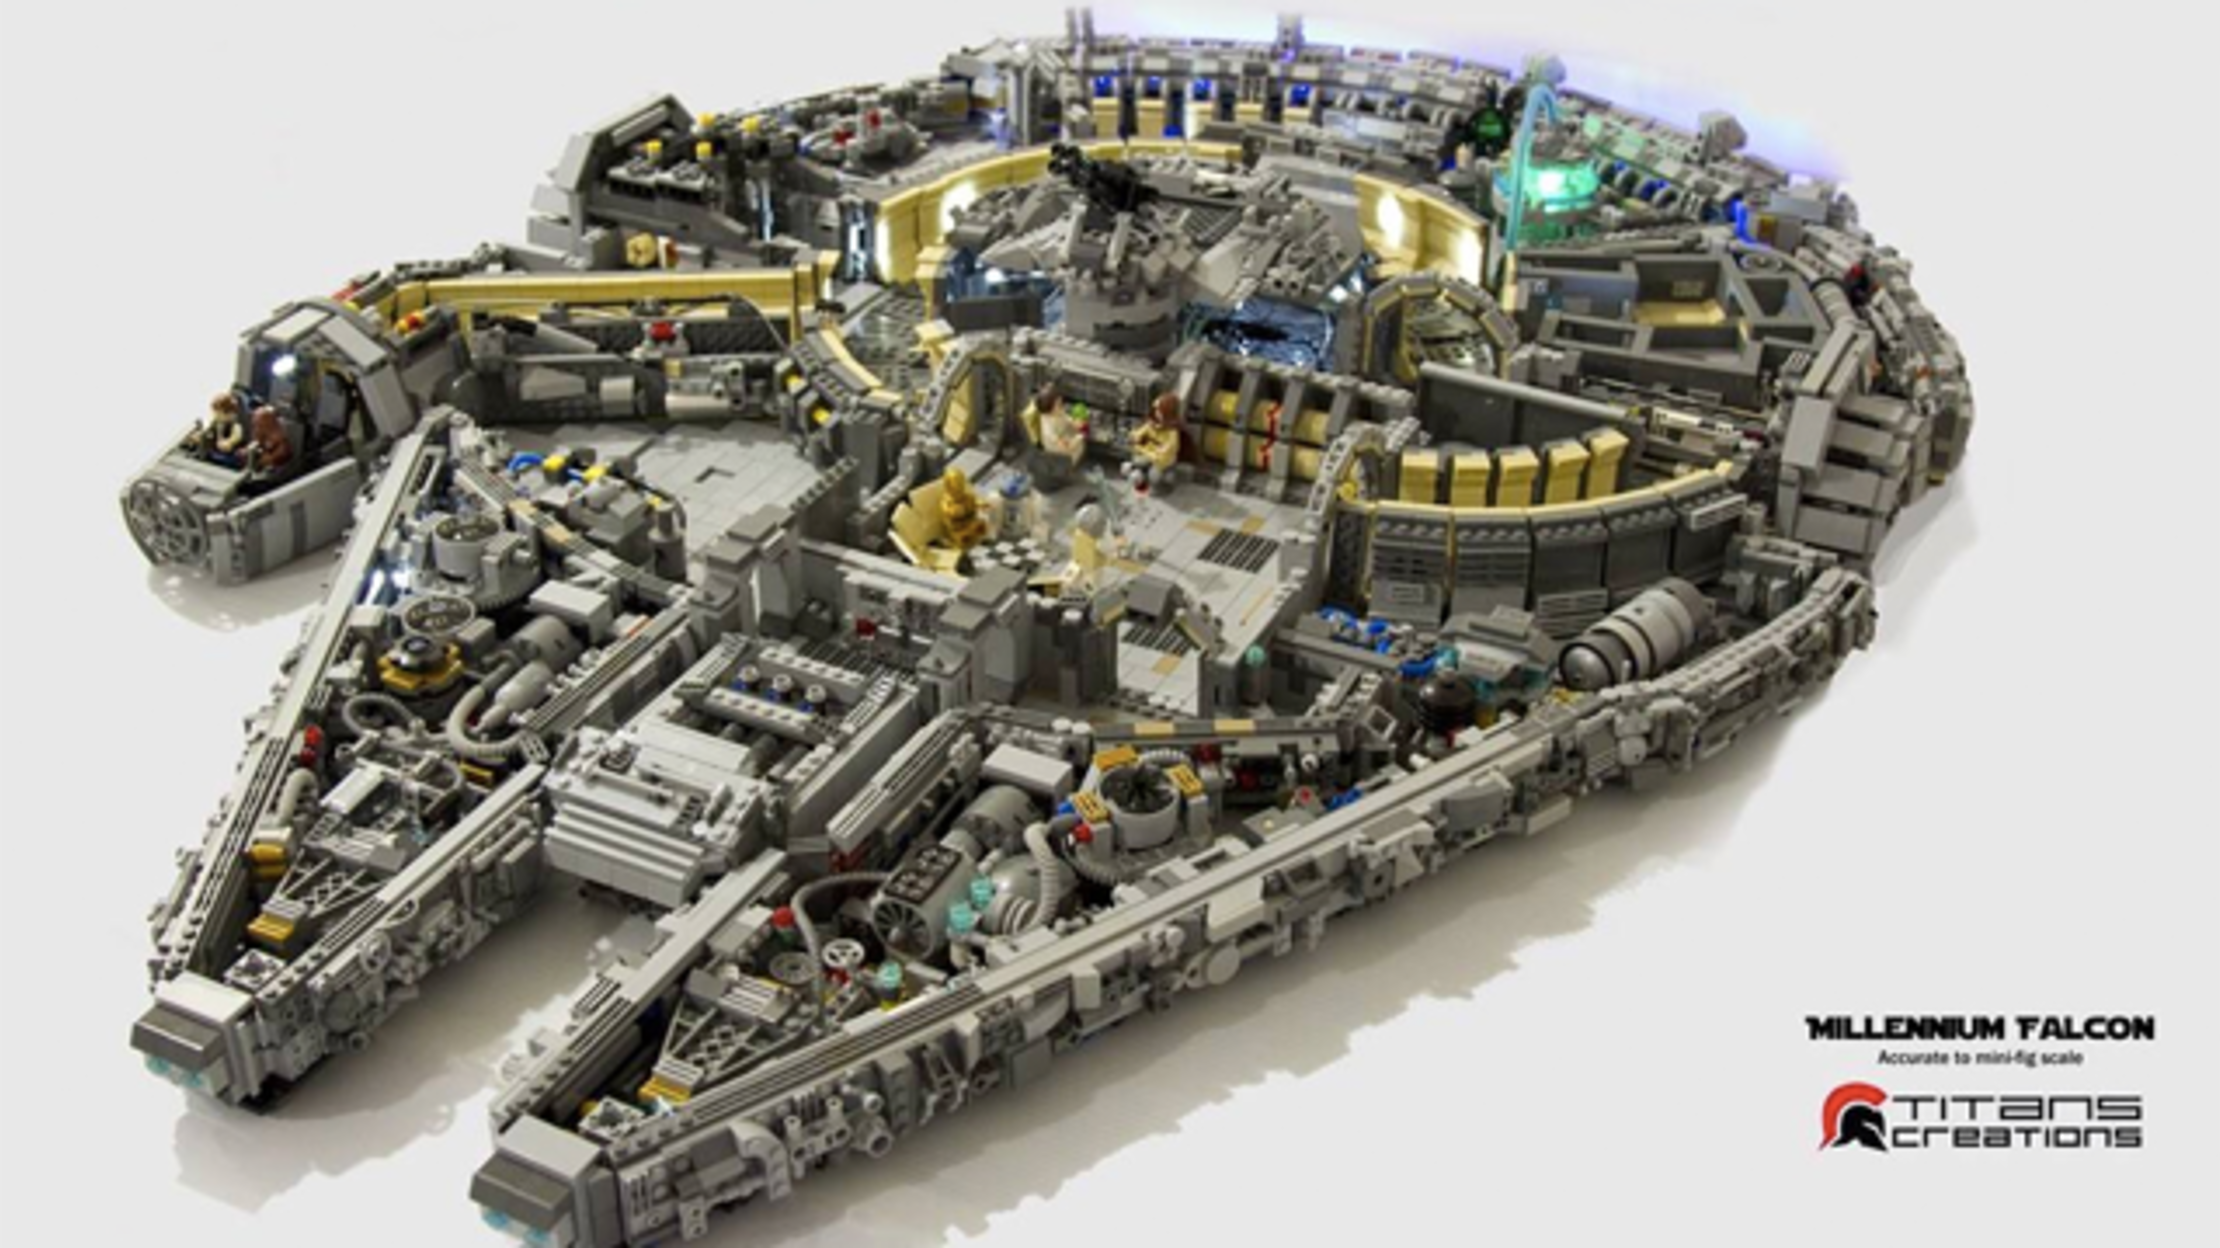 Giant LEGO Millennium Falcon Took 10,000 Pieces to Build | Mental Floss